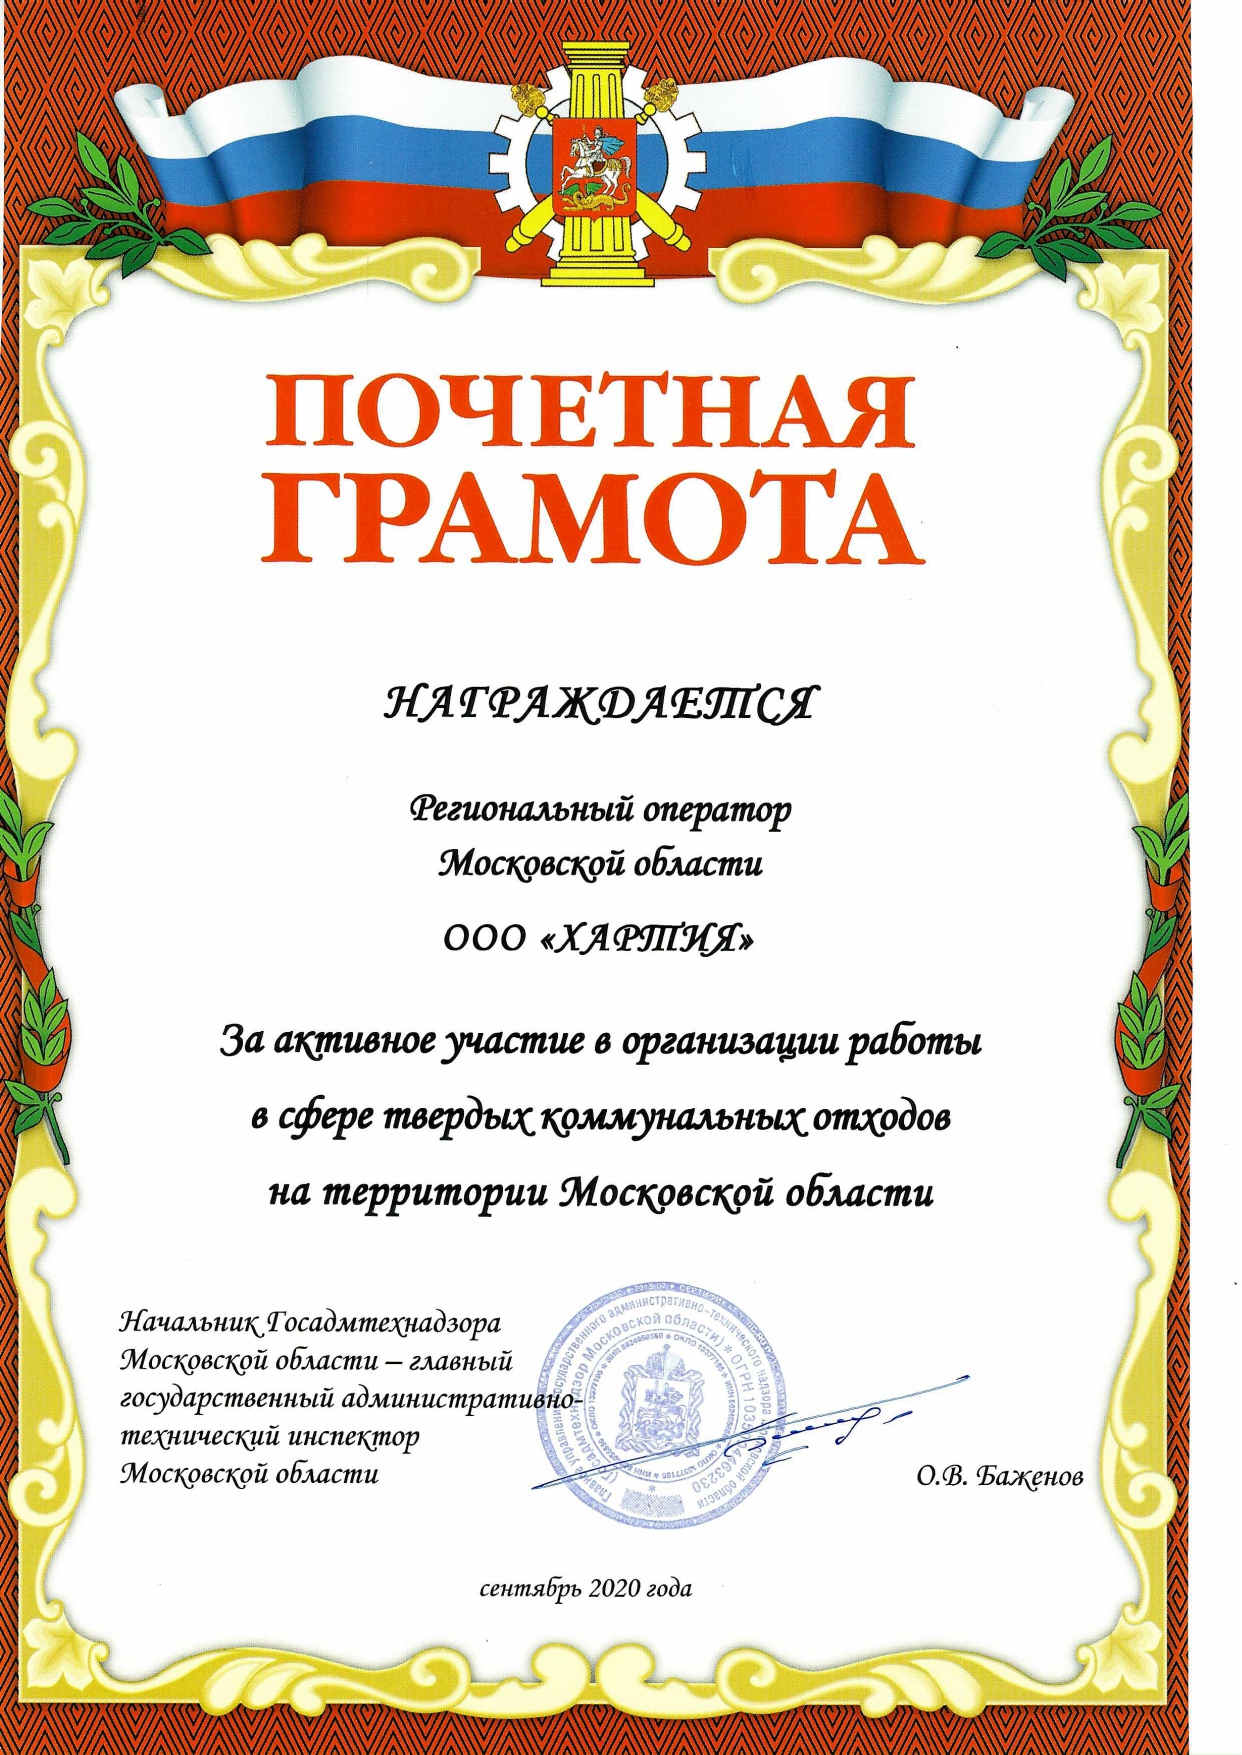 Почетная грамота от Госадмтехнадзора Московской области